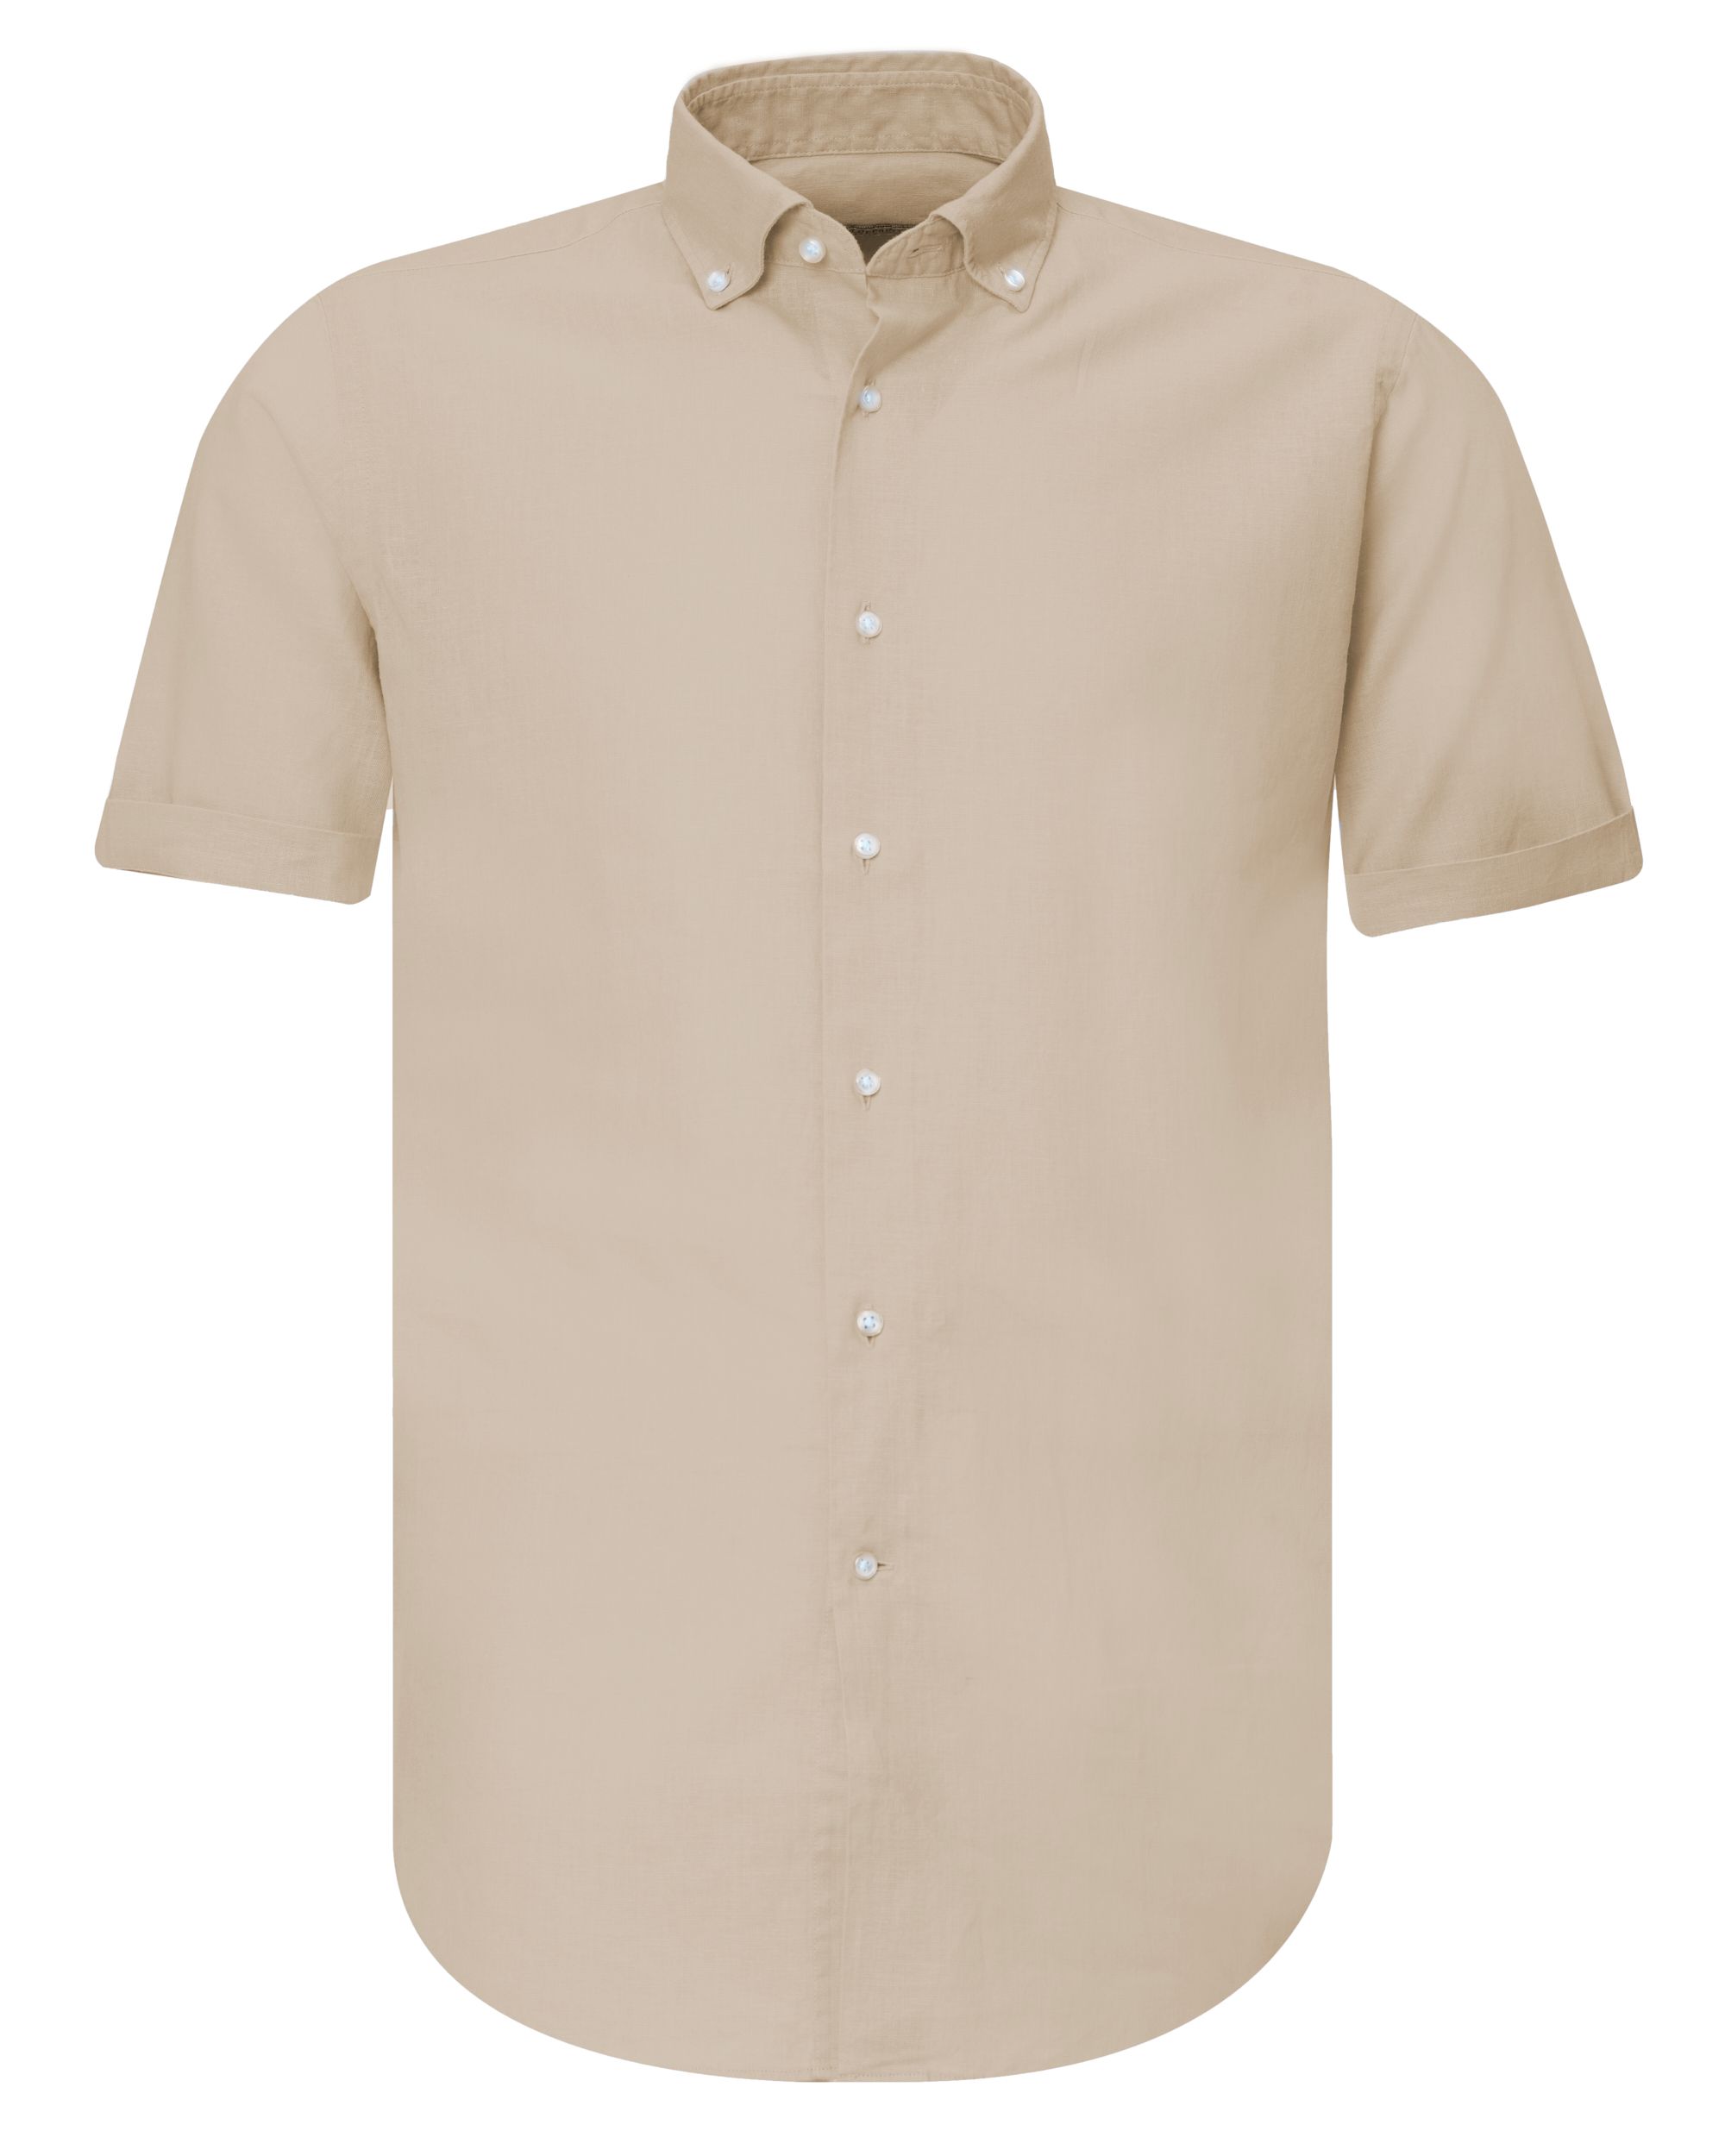 The BLUEPRINT Premium Casual Overhemd KM Lichtbeige uni 077930-006-L